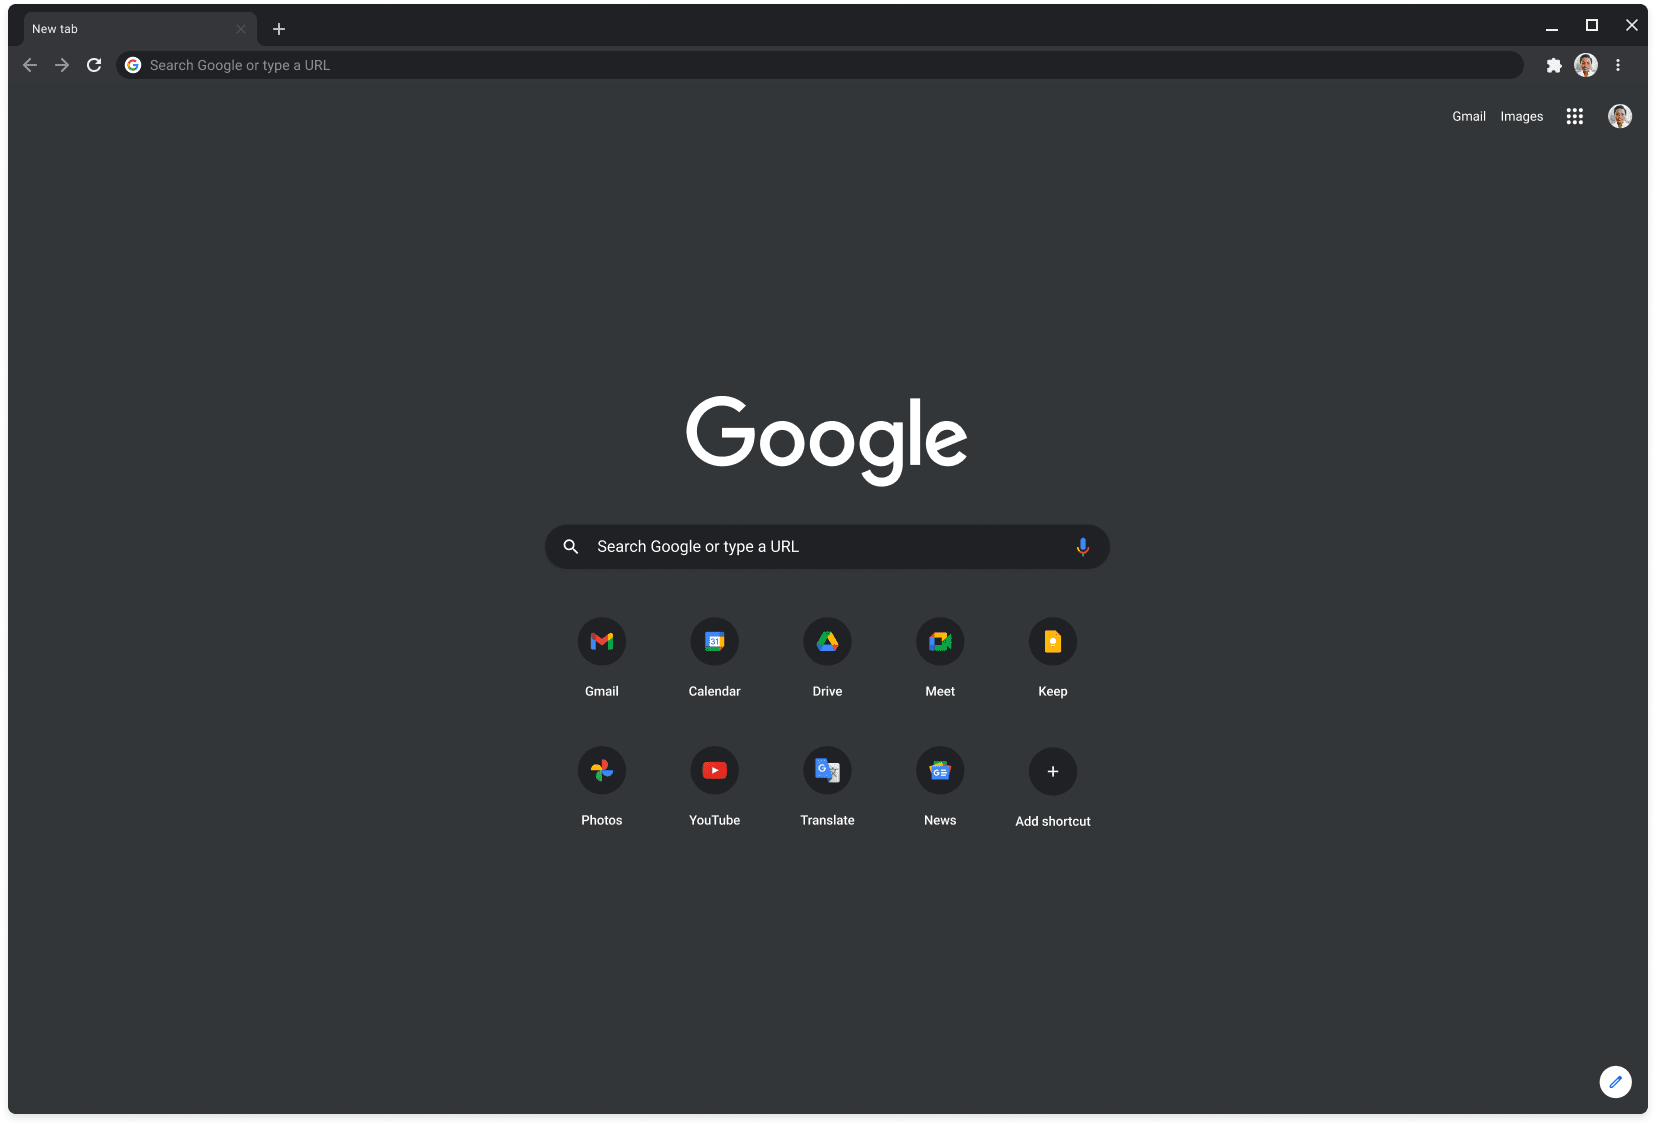 Chrome browser window in dark mode, displaying Google.com.